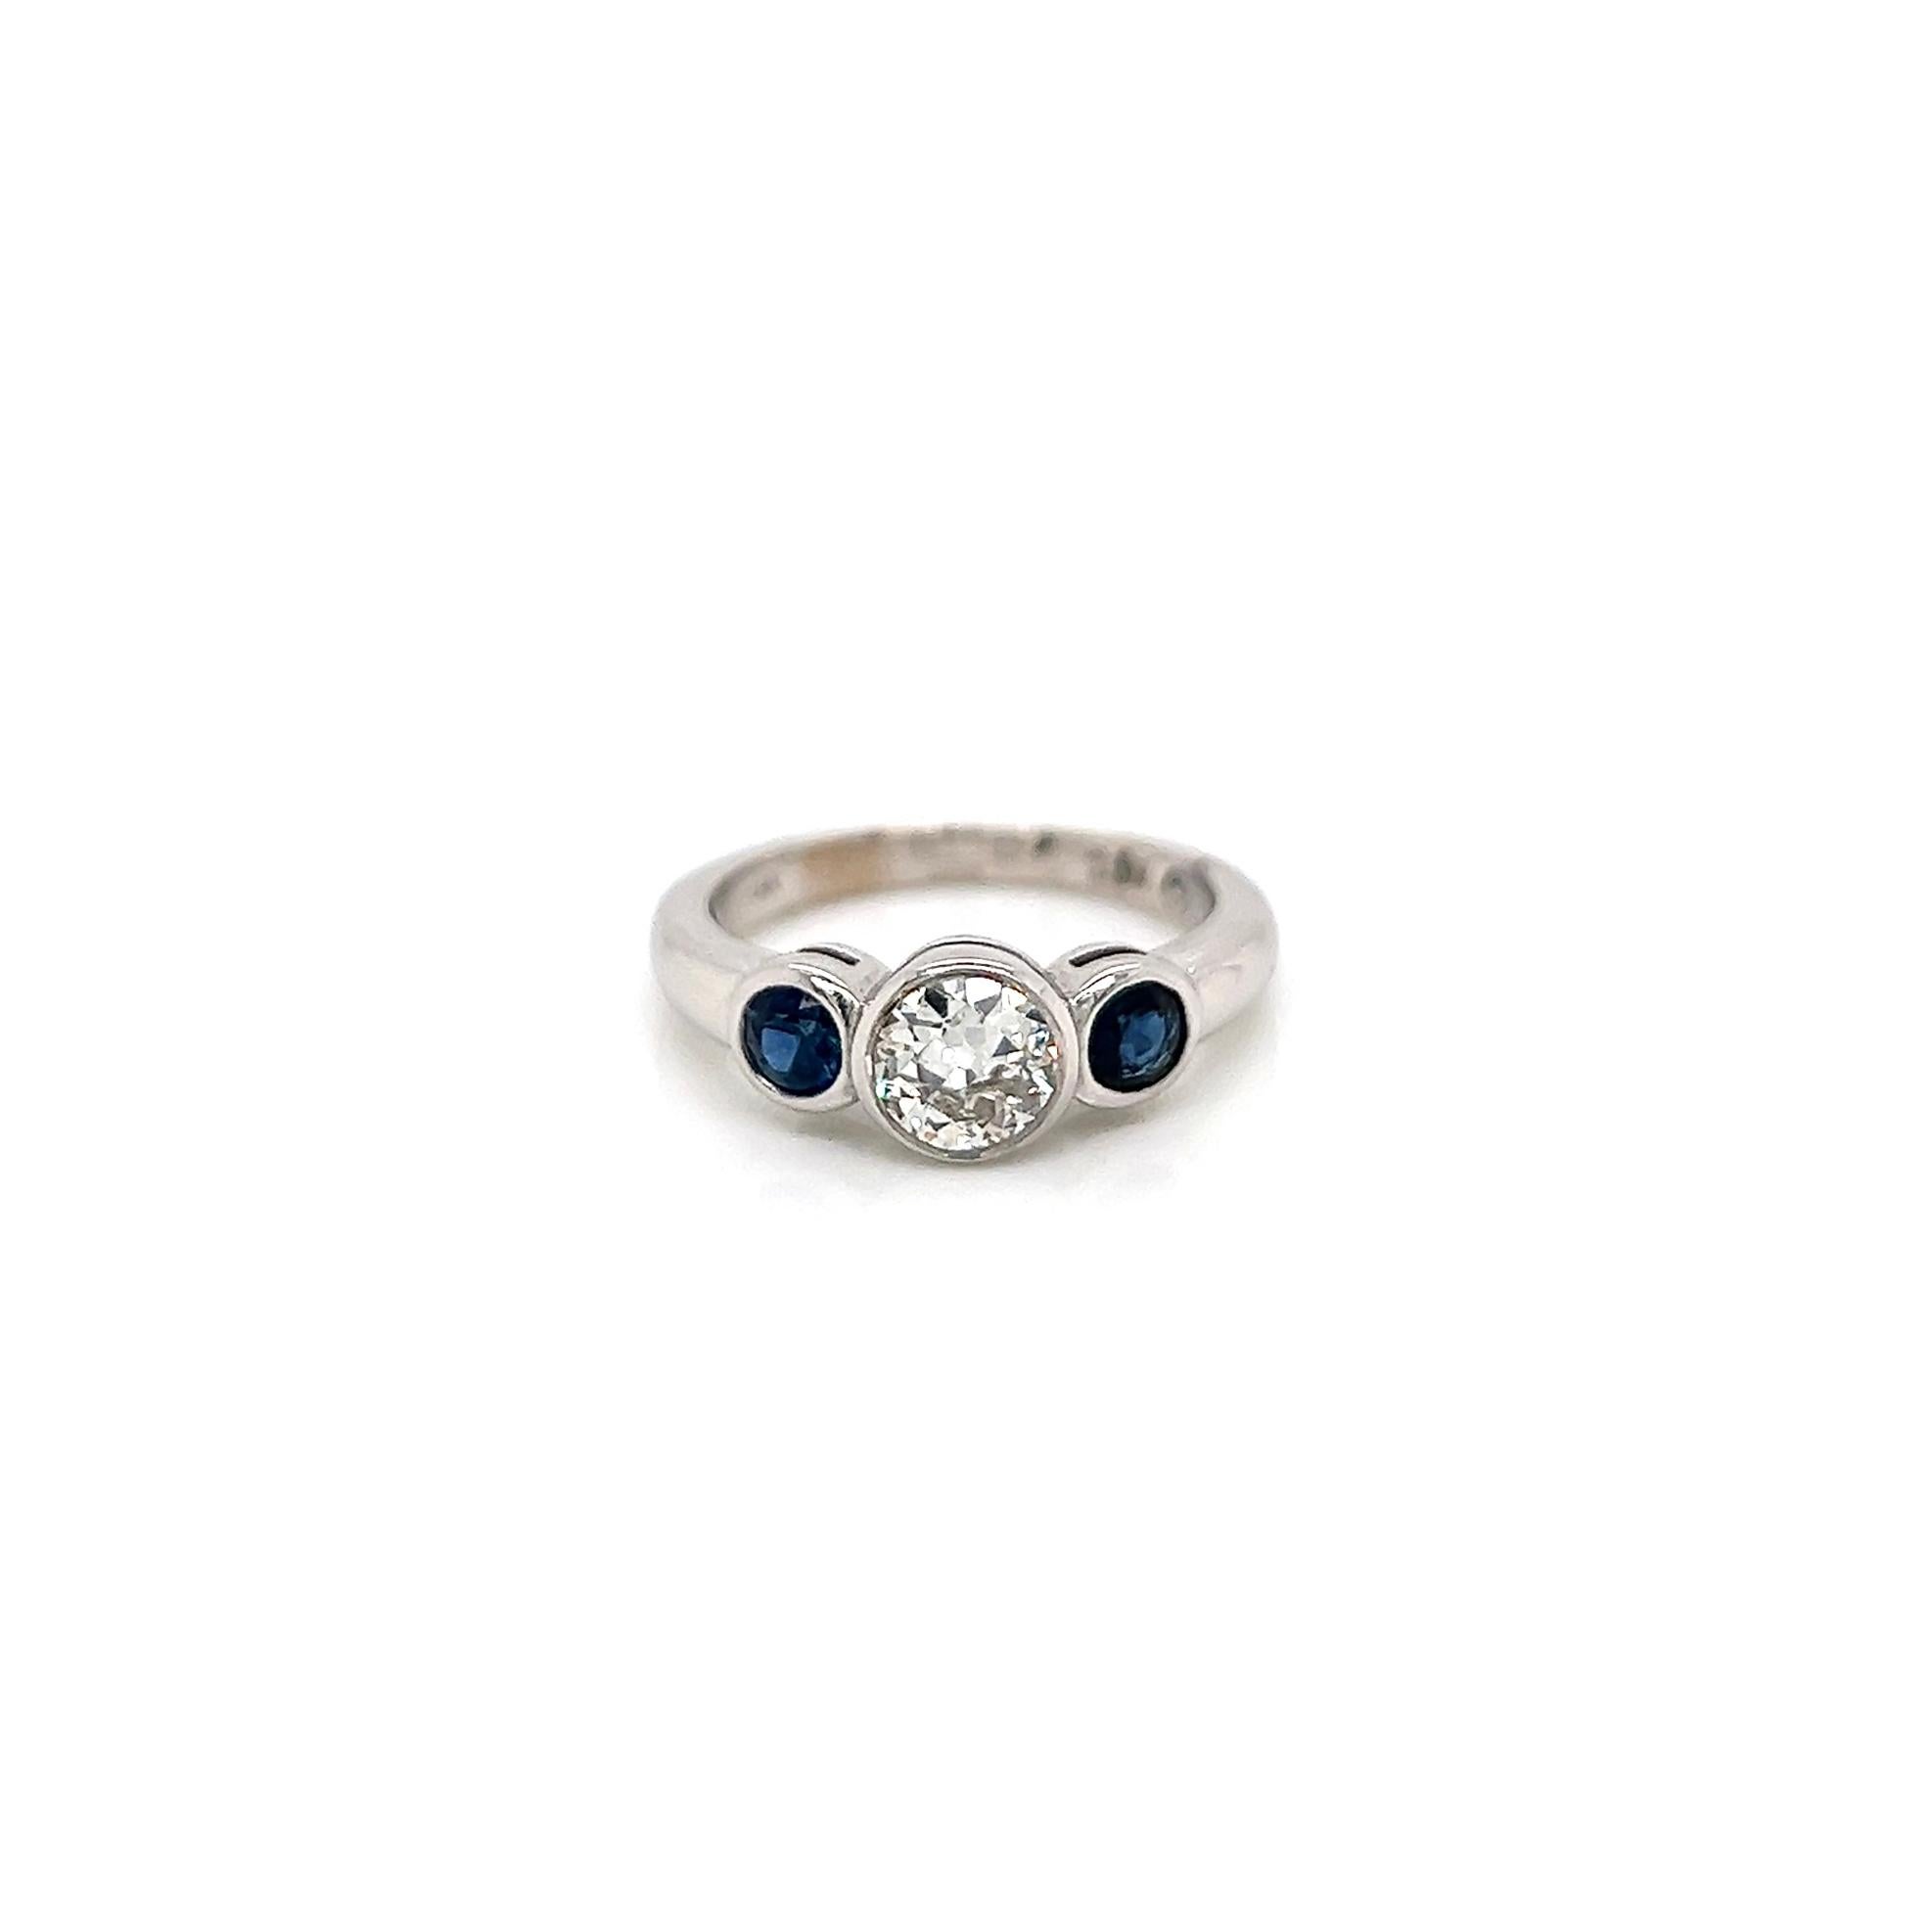 1.04Carat Sapphire Diamond Engagement Ring

-Metal Type: 18K White Gold
-0.60Carat Old European Cut Natural Diamond Center 
-0.44Carat Round Side Blue Sapphires
-Size 6.0

Made in New York City